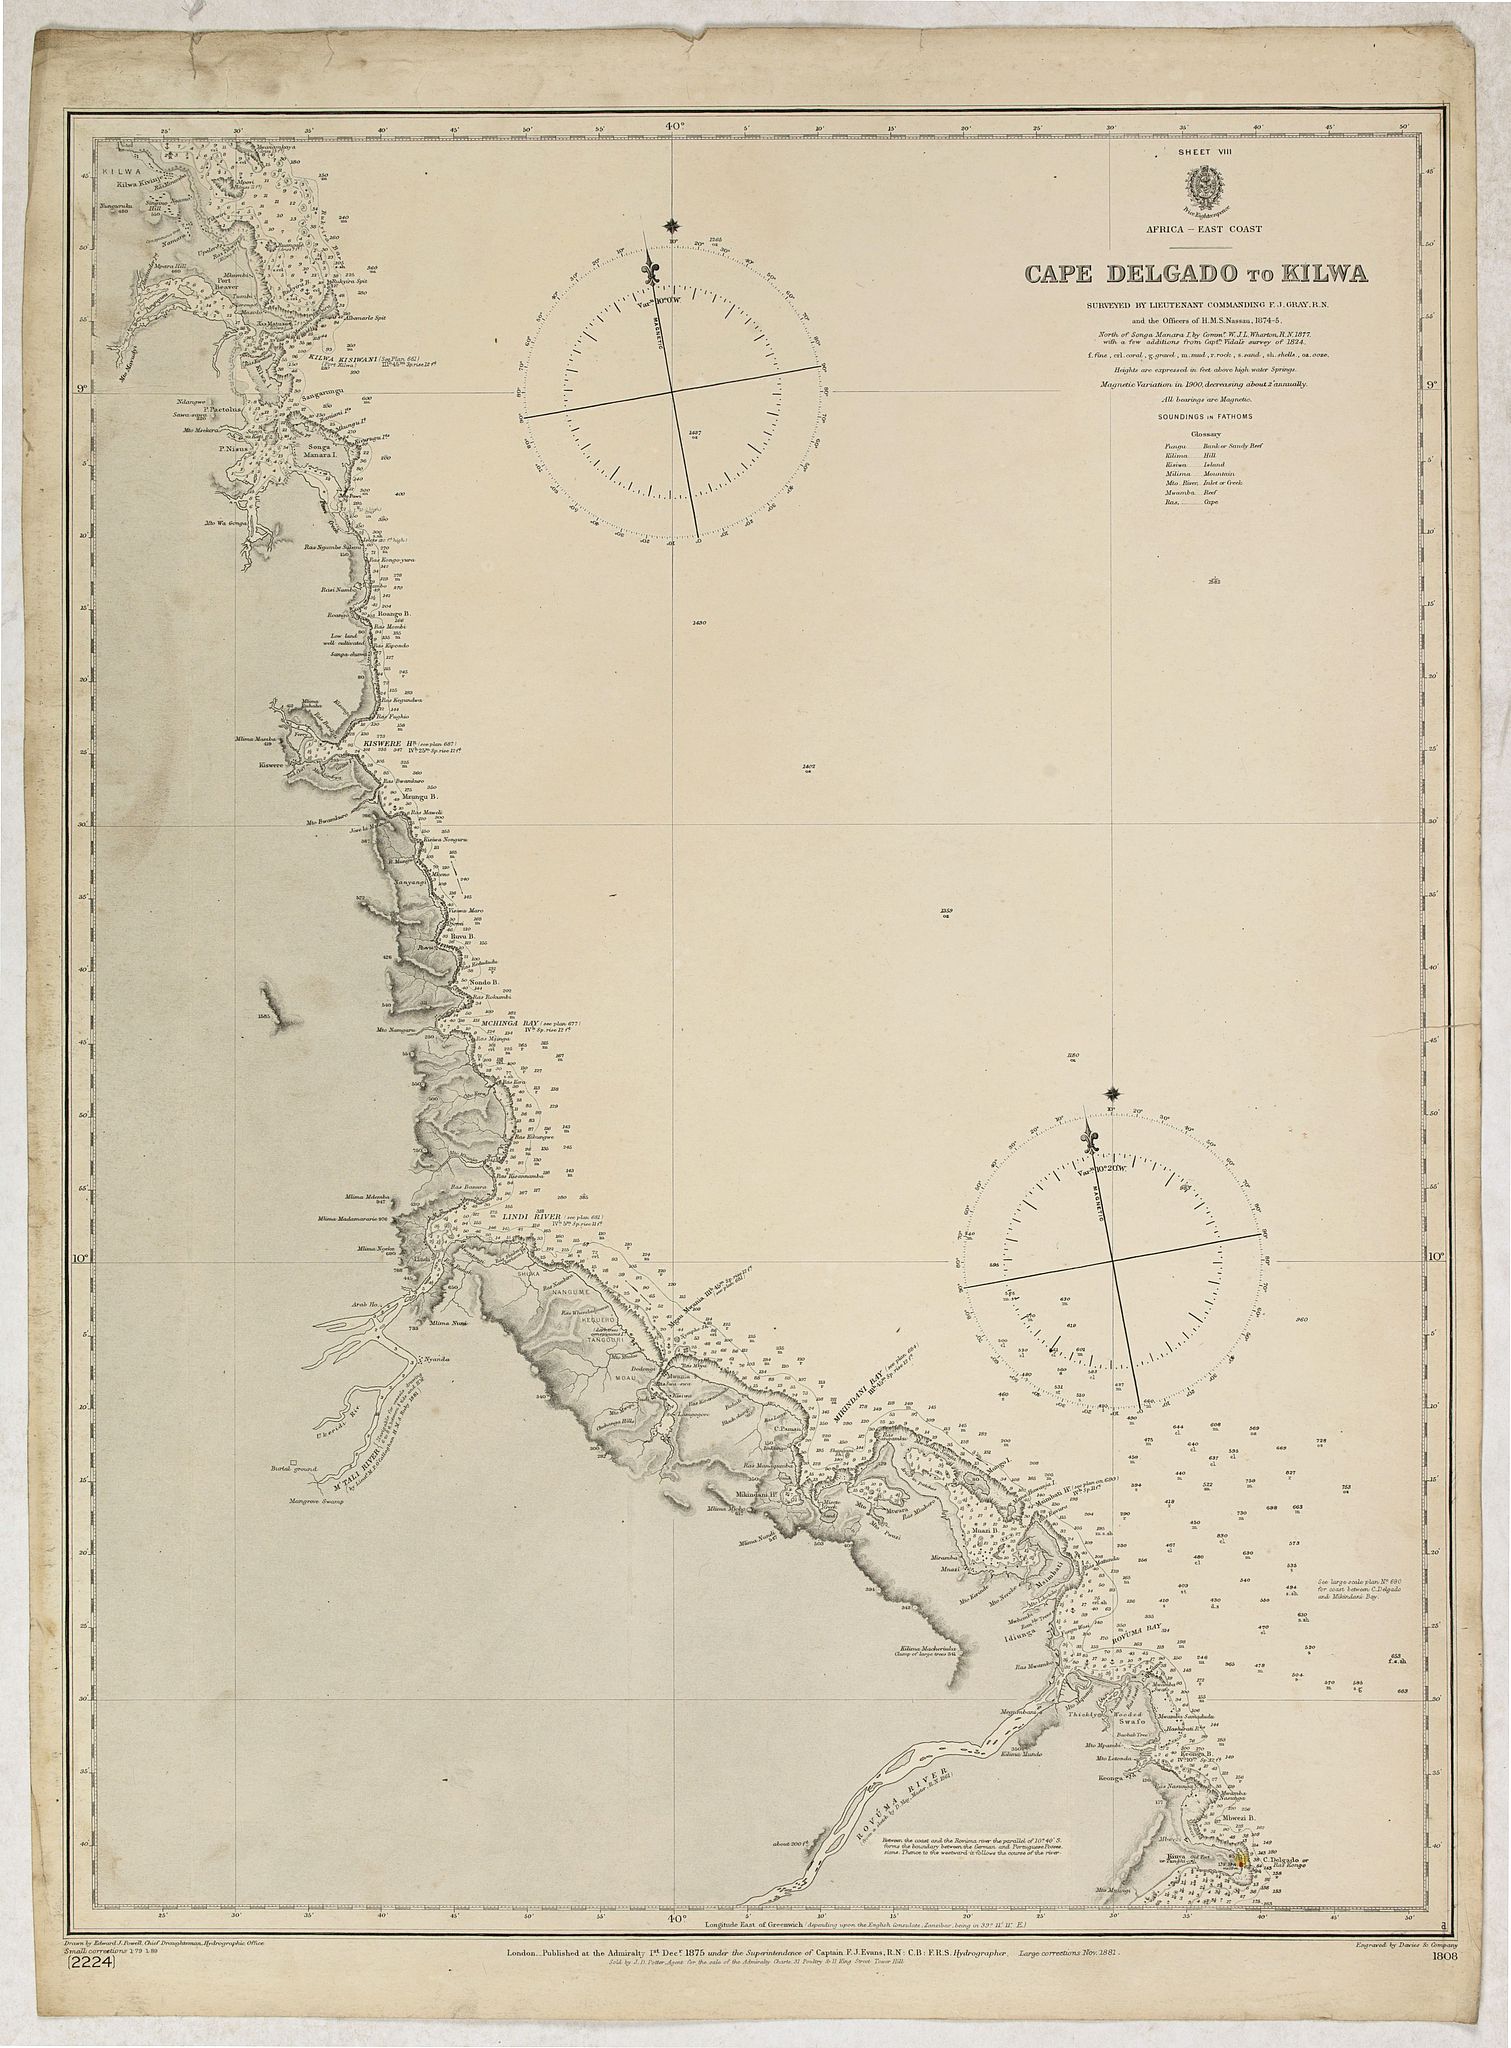 Sheet VIII Africa east coast Cape Delgado to Kilwa surveyed by Lieutenant Commanding FJ Gray RN HMS Nassau 1874-5